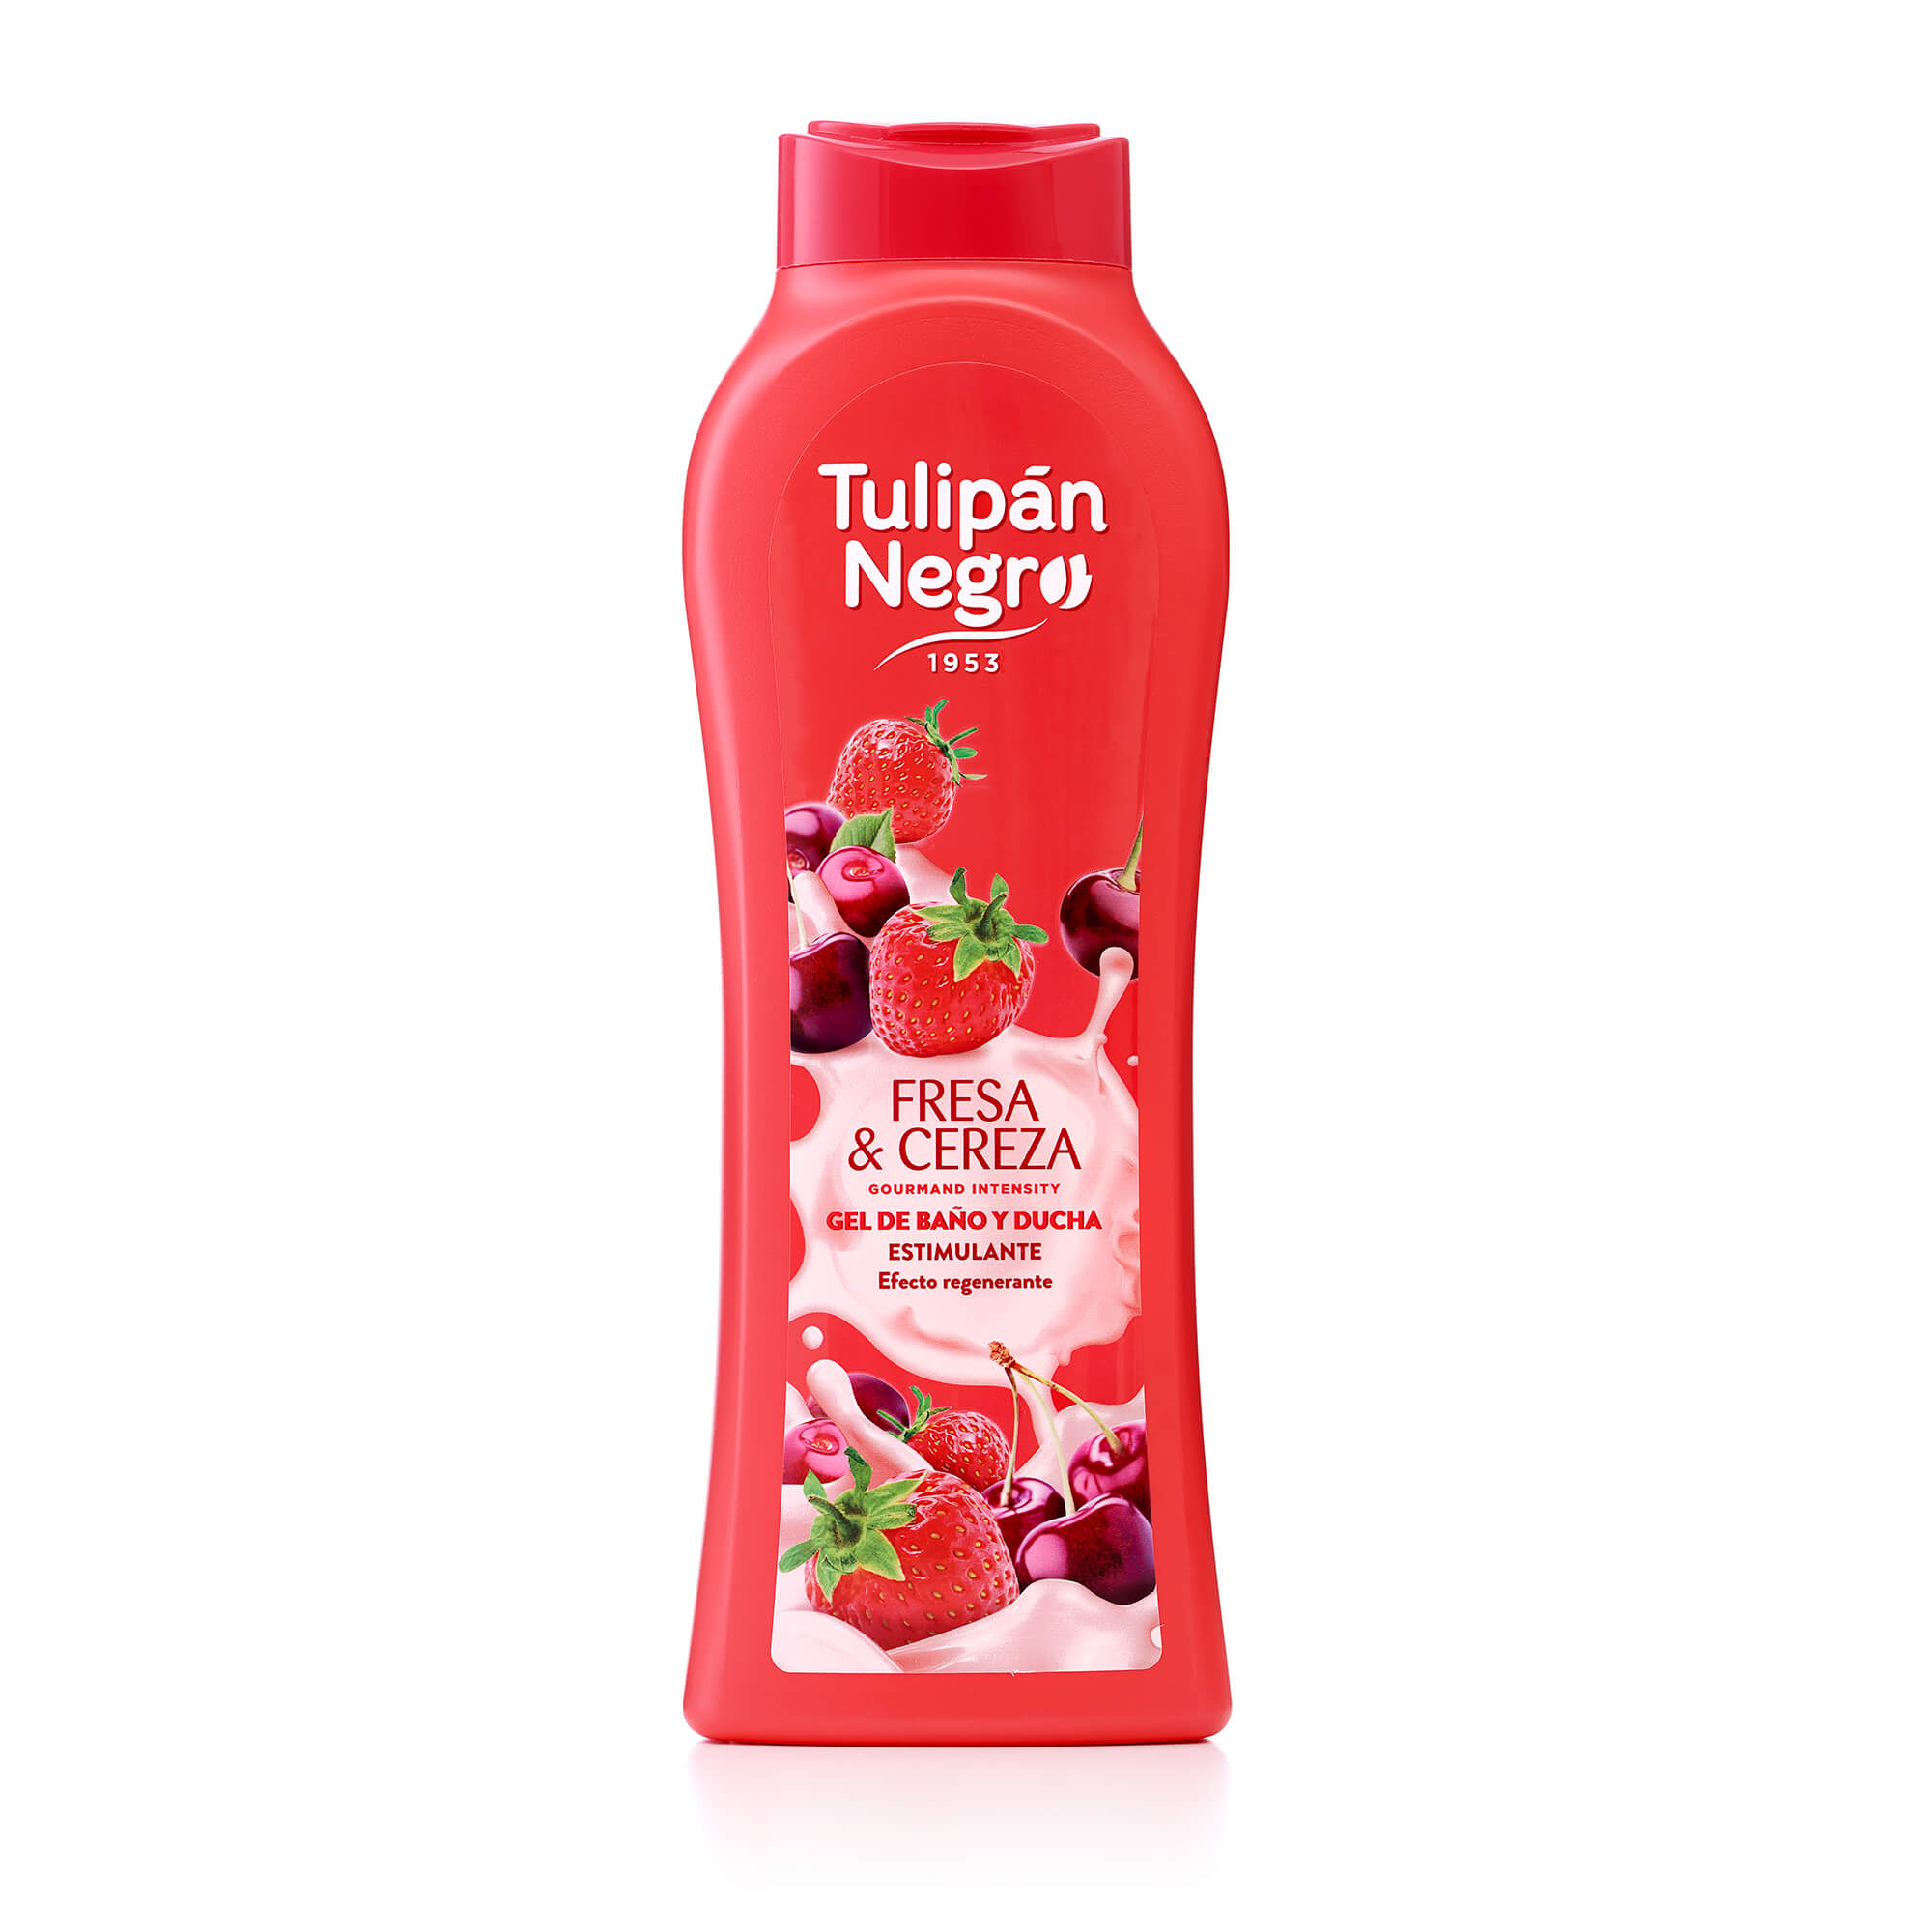 Tulipán Negro Caramel & Toffee Body Wash - 650ML